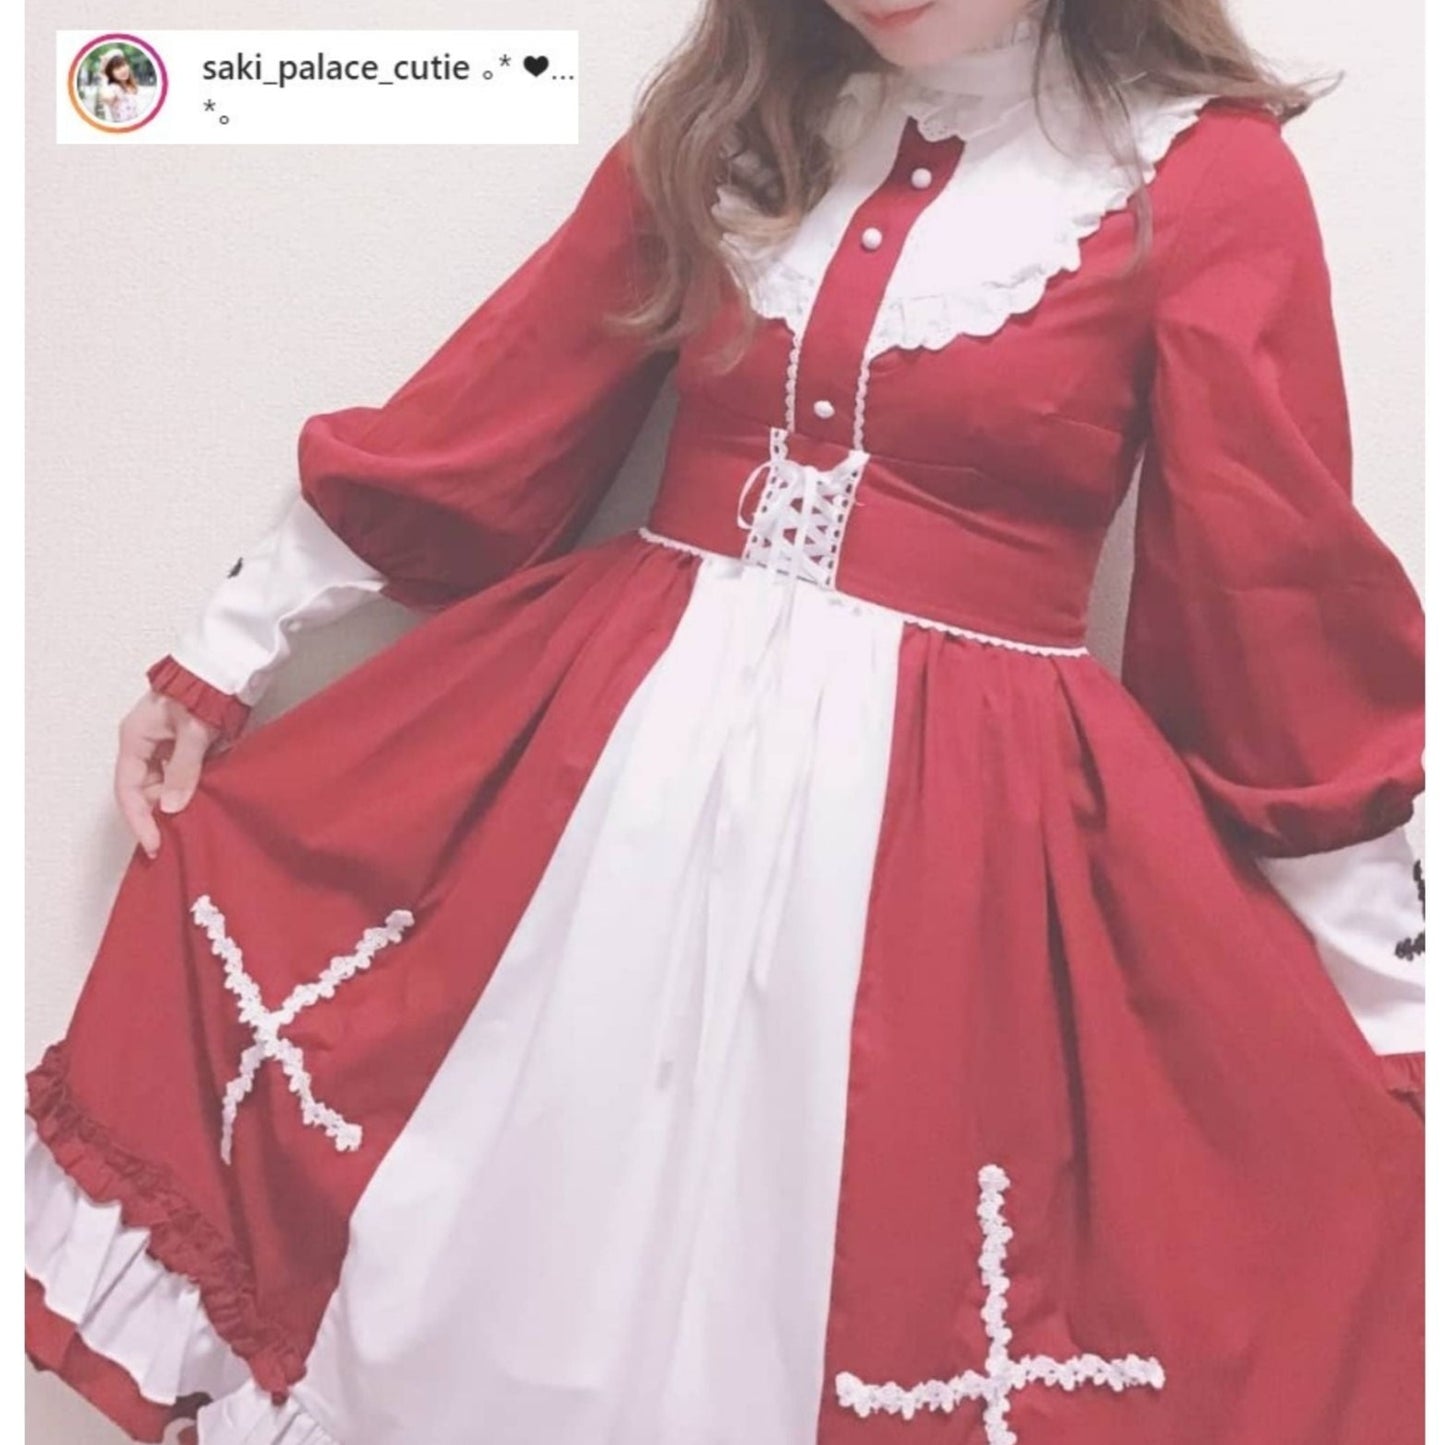 Cross lace saint lolita dress